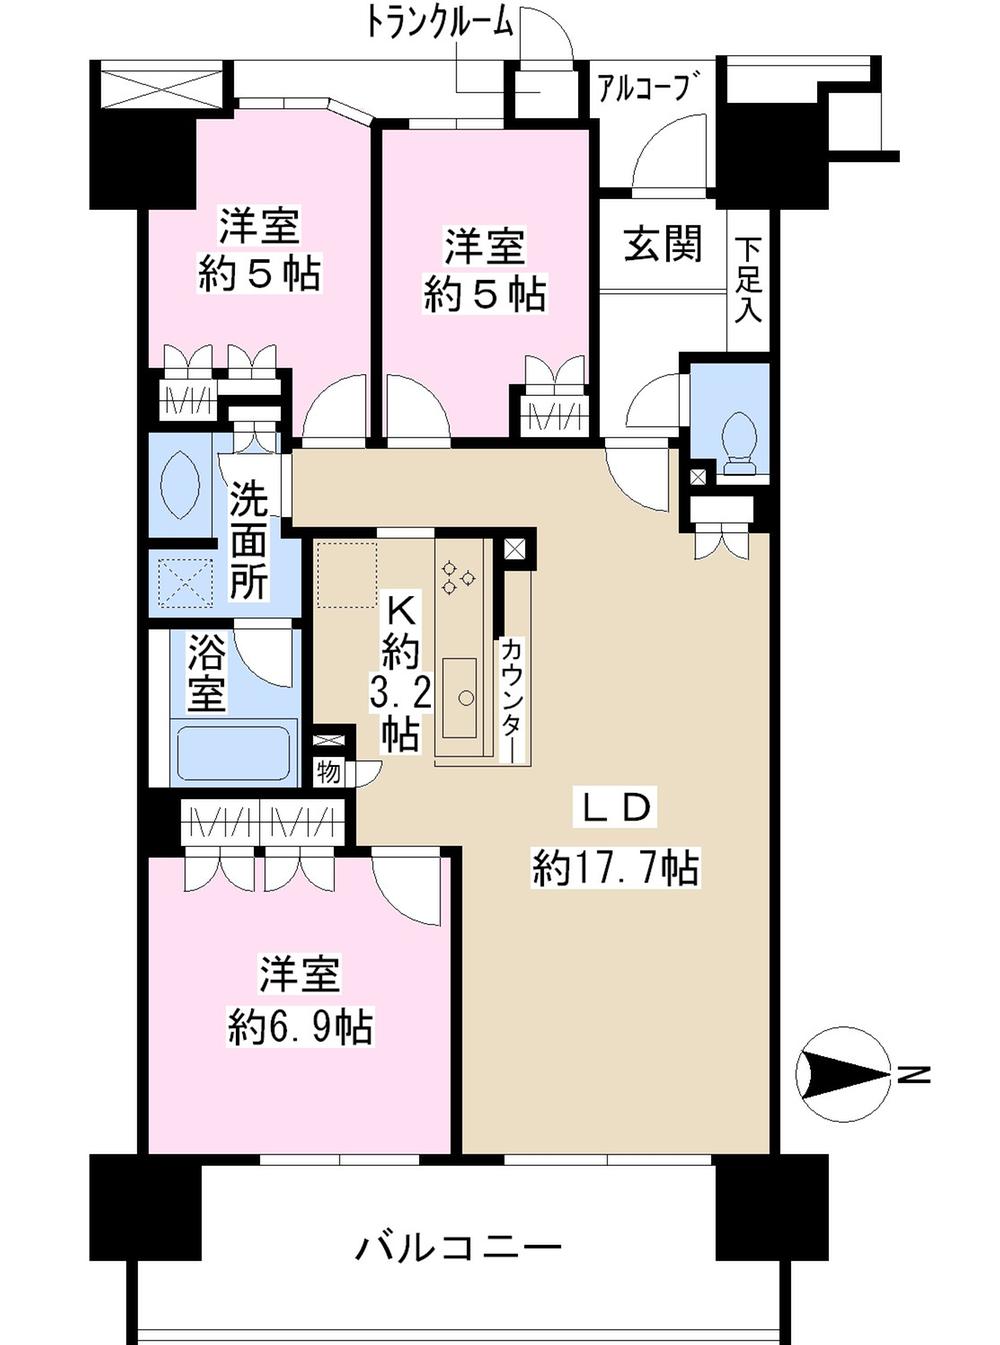 Floor plan. 3LDK, Price 34,800,000 yen, Occupied area 79.31 sq m , Balcony area 14.4 sq m